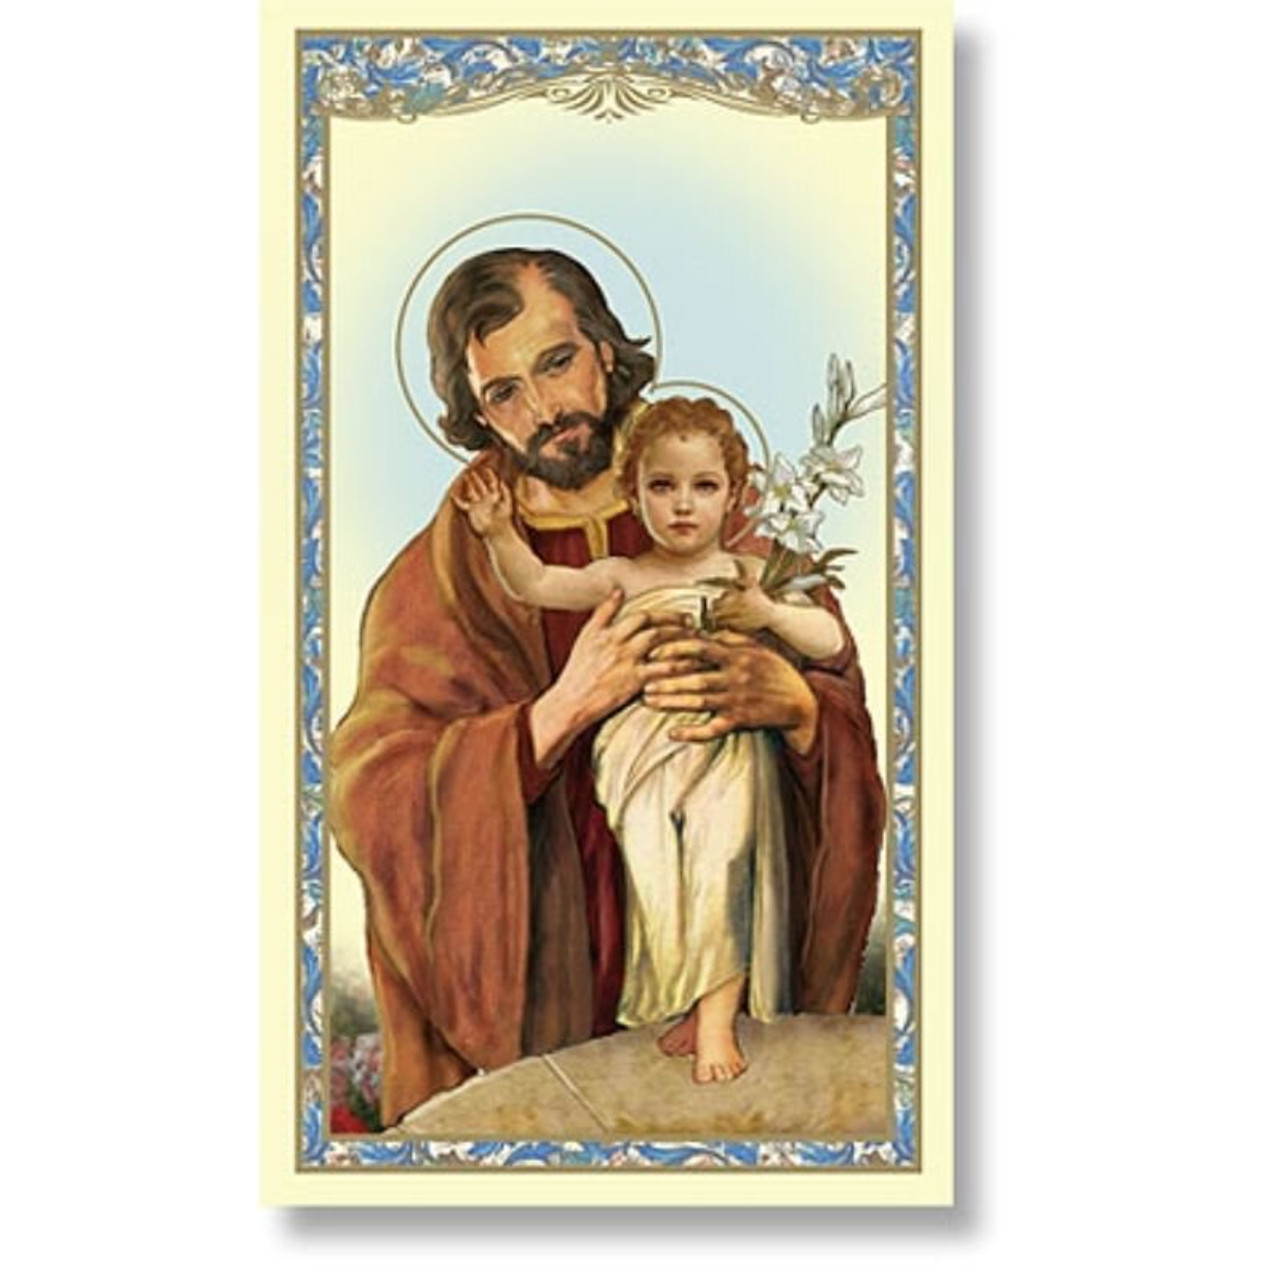 St. Joseph with Child Holy Card - 100/pk - [Consumer]Autom